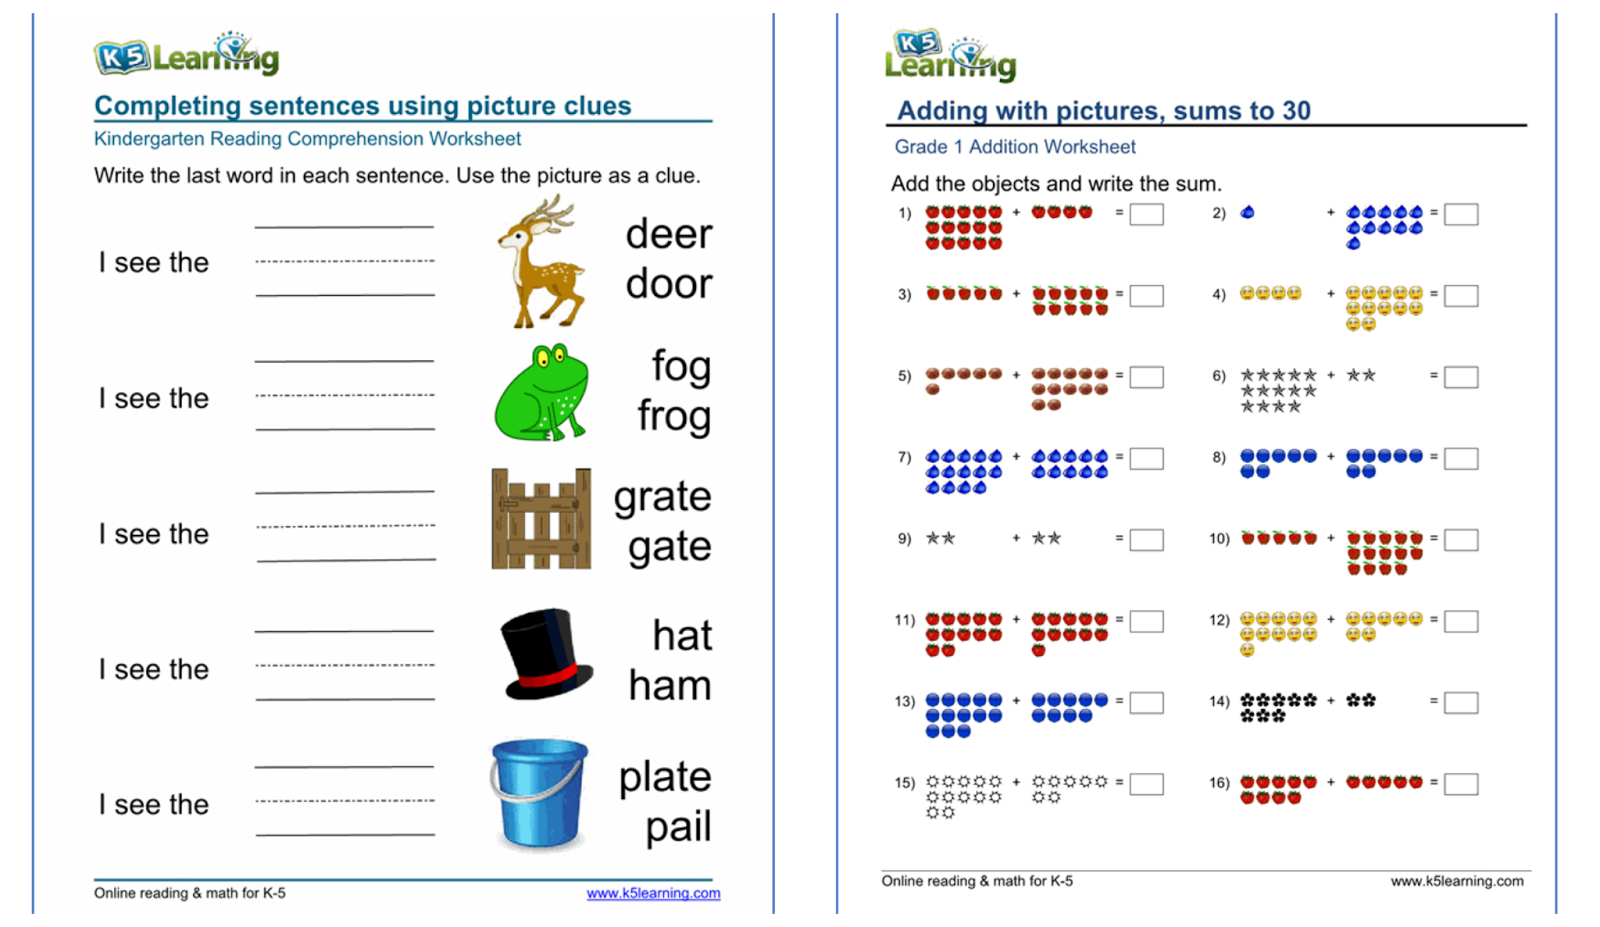 online-math-and-reading-enrichment-program-for-kids-k5-learning-review-k5-learning-worksheets